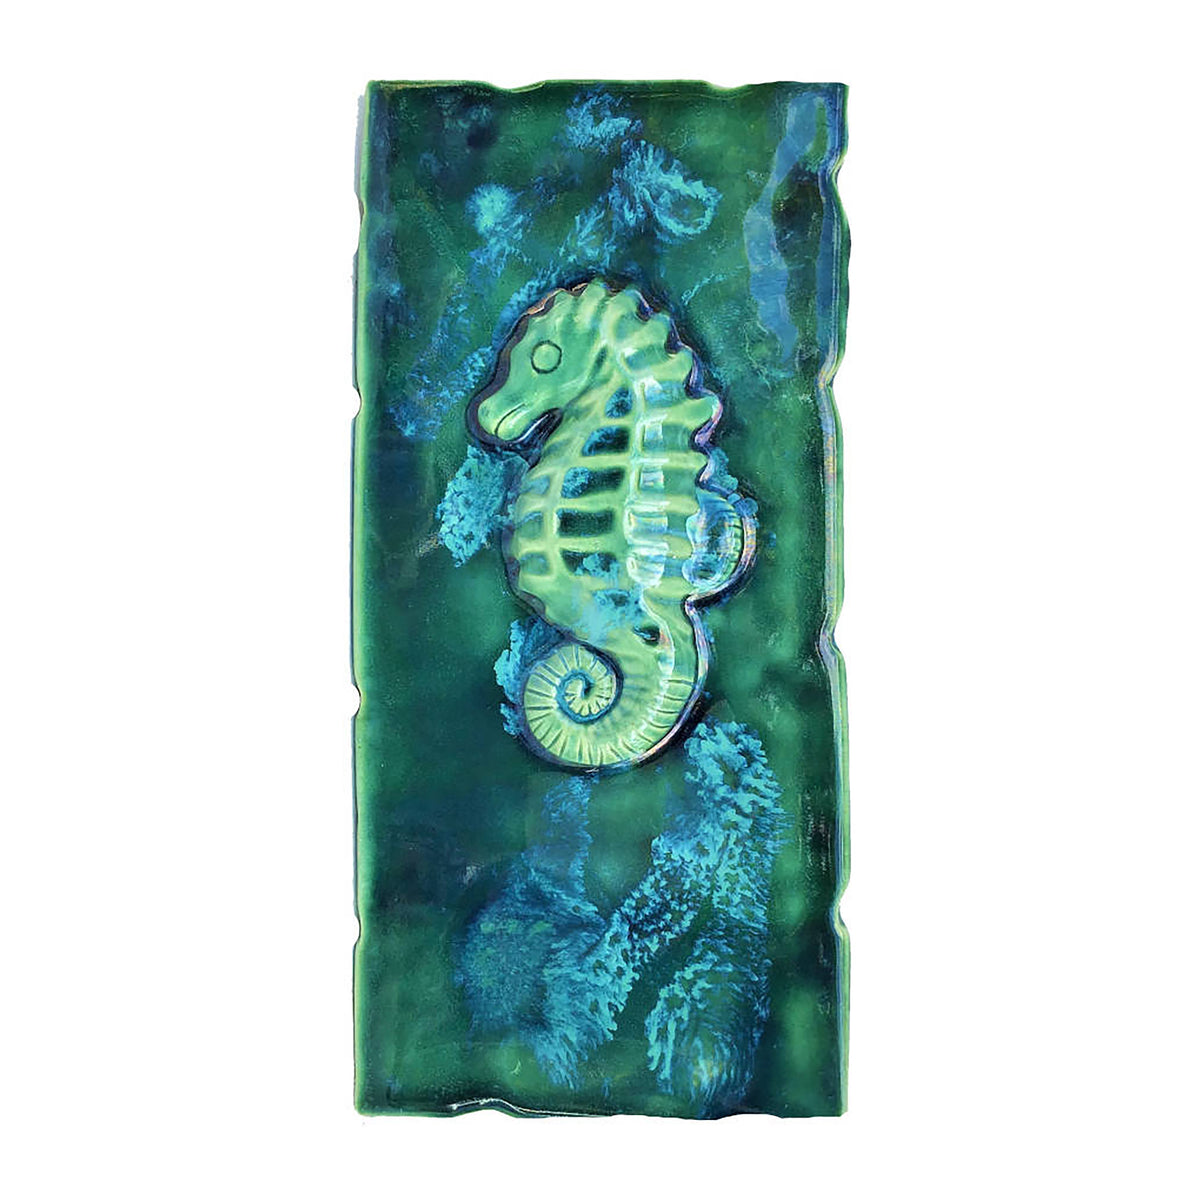 Seahorse wall artwork, ceramic seahorse wall hanging, seahorse bathroom shower tiles, ceramic seahorse